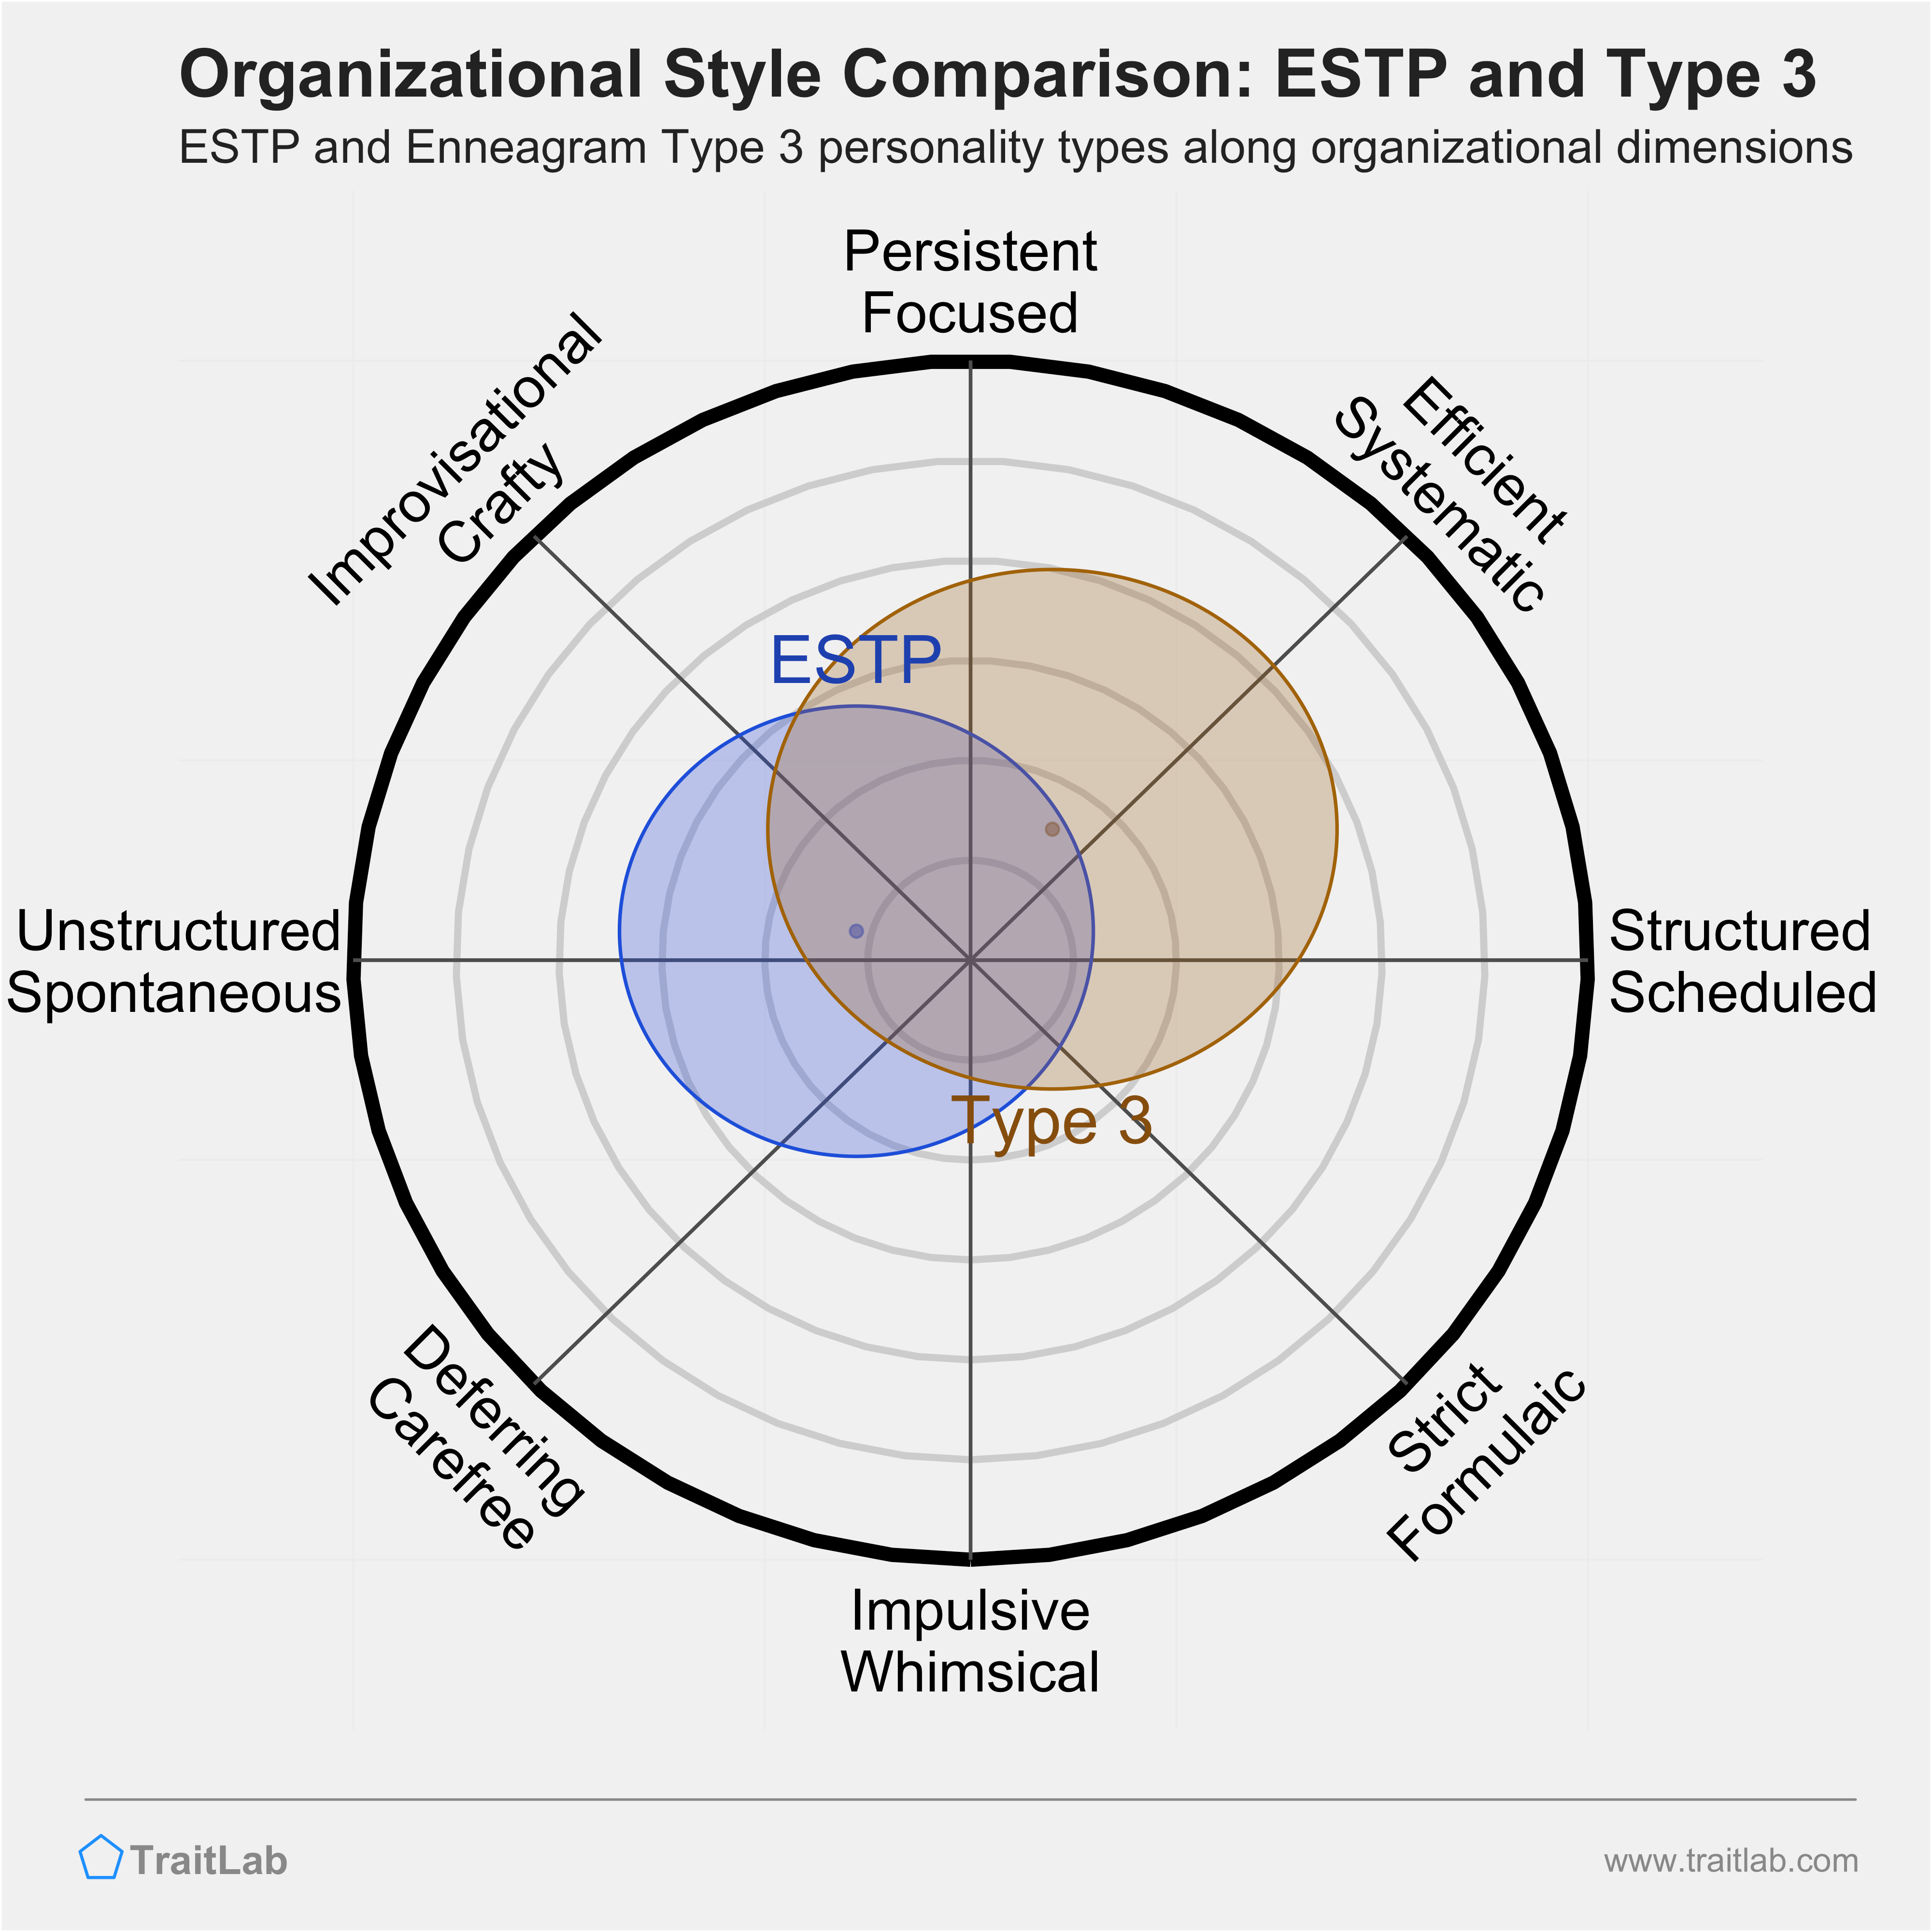 ESTP and Type 3 comparison across organizational dimensions